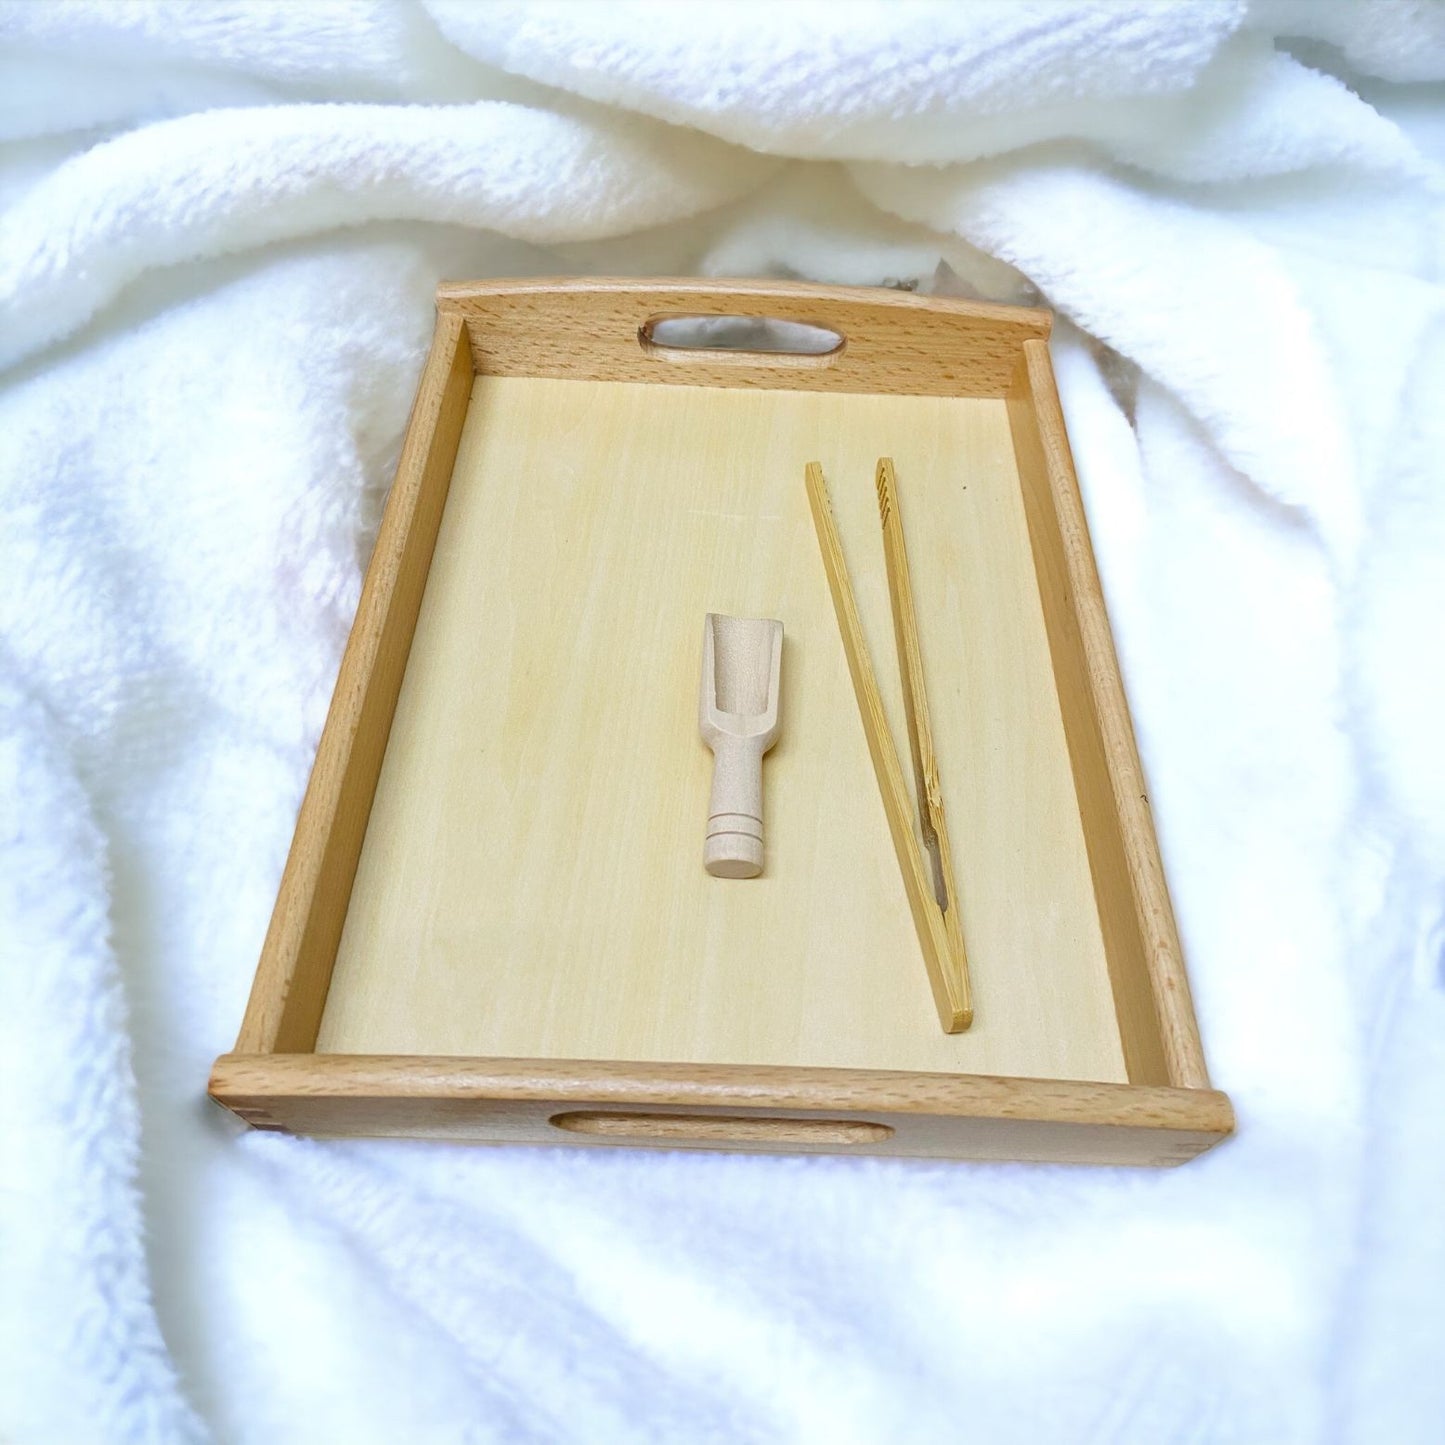 Montessori wooden tray with tweezer and mini sccop